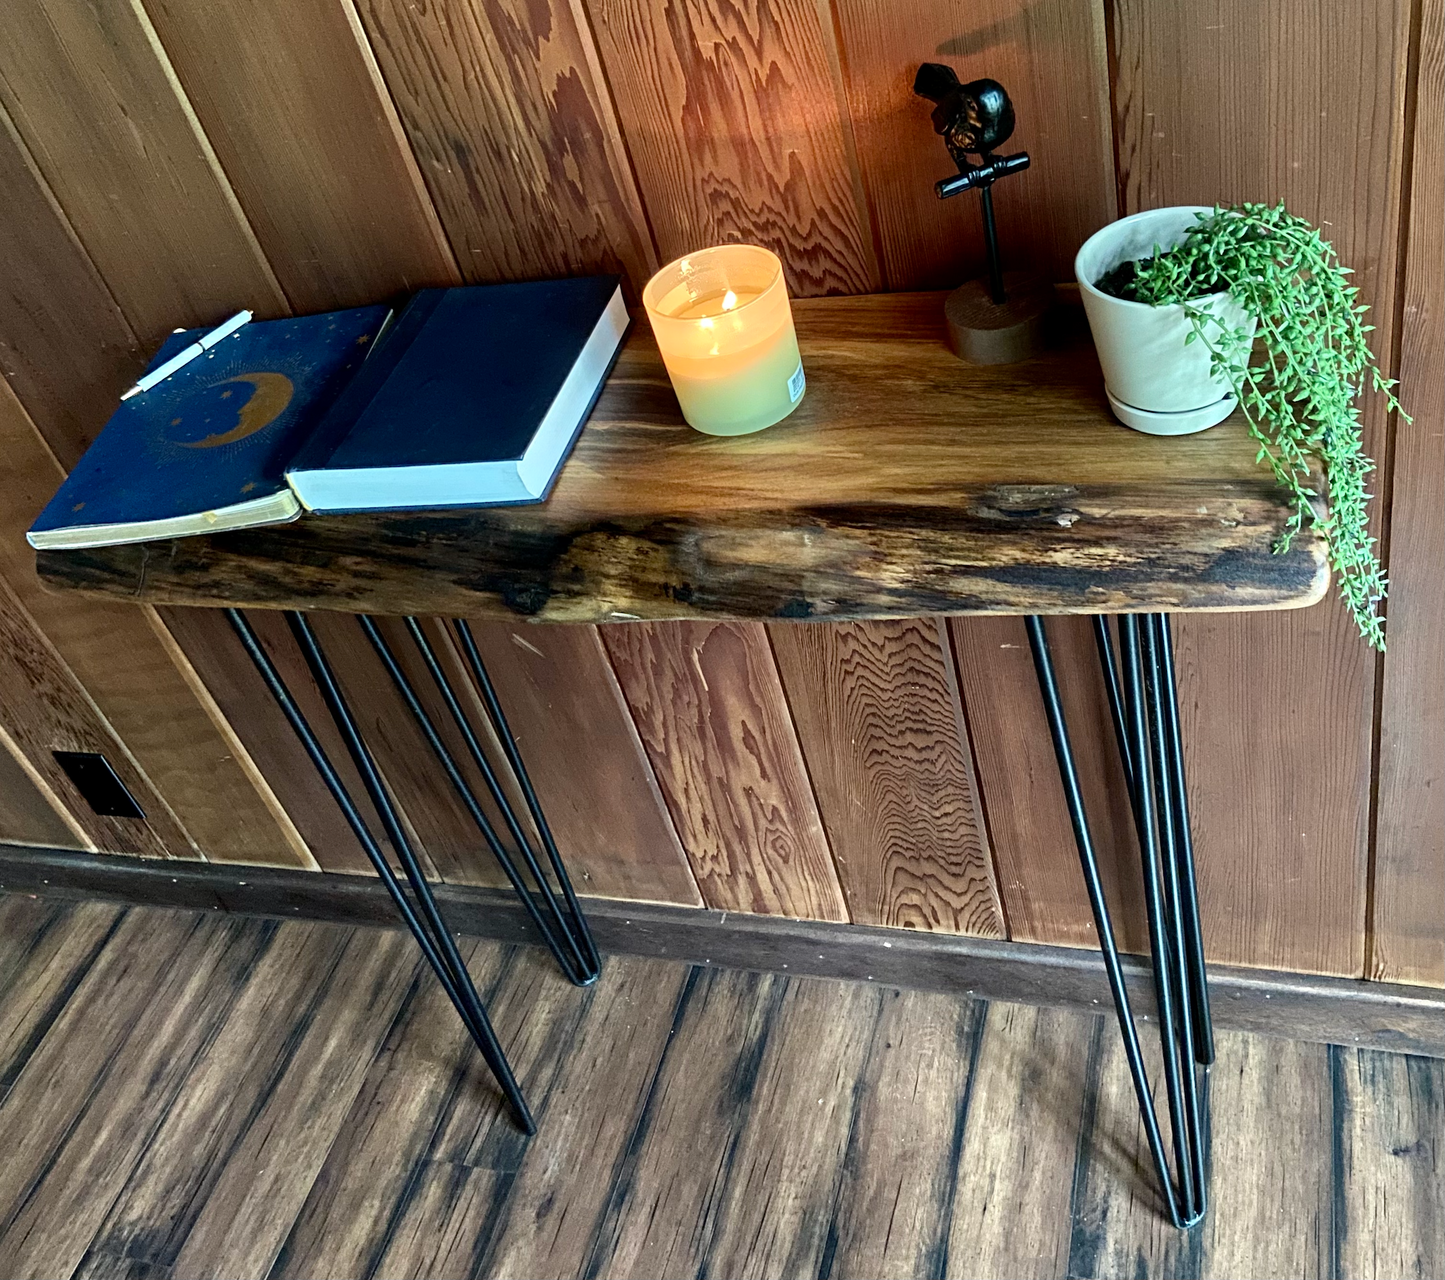  Live Edge Lightly Colored Walnut Console Table|Rustic Farmhouse Entry Table or Live Edge Sofa Table|Wood Entry Table|Live Edge Display Table